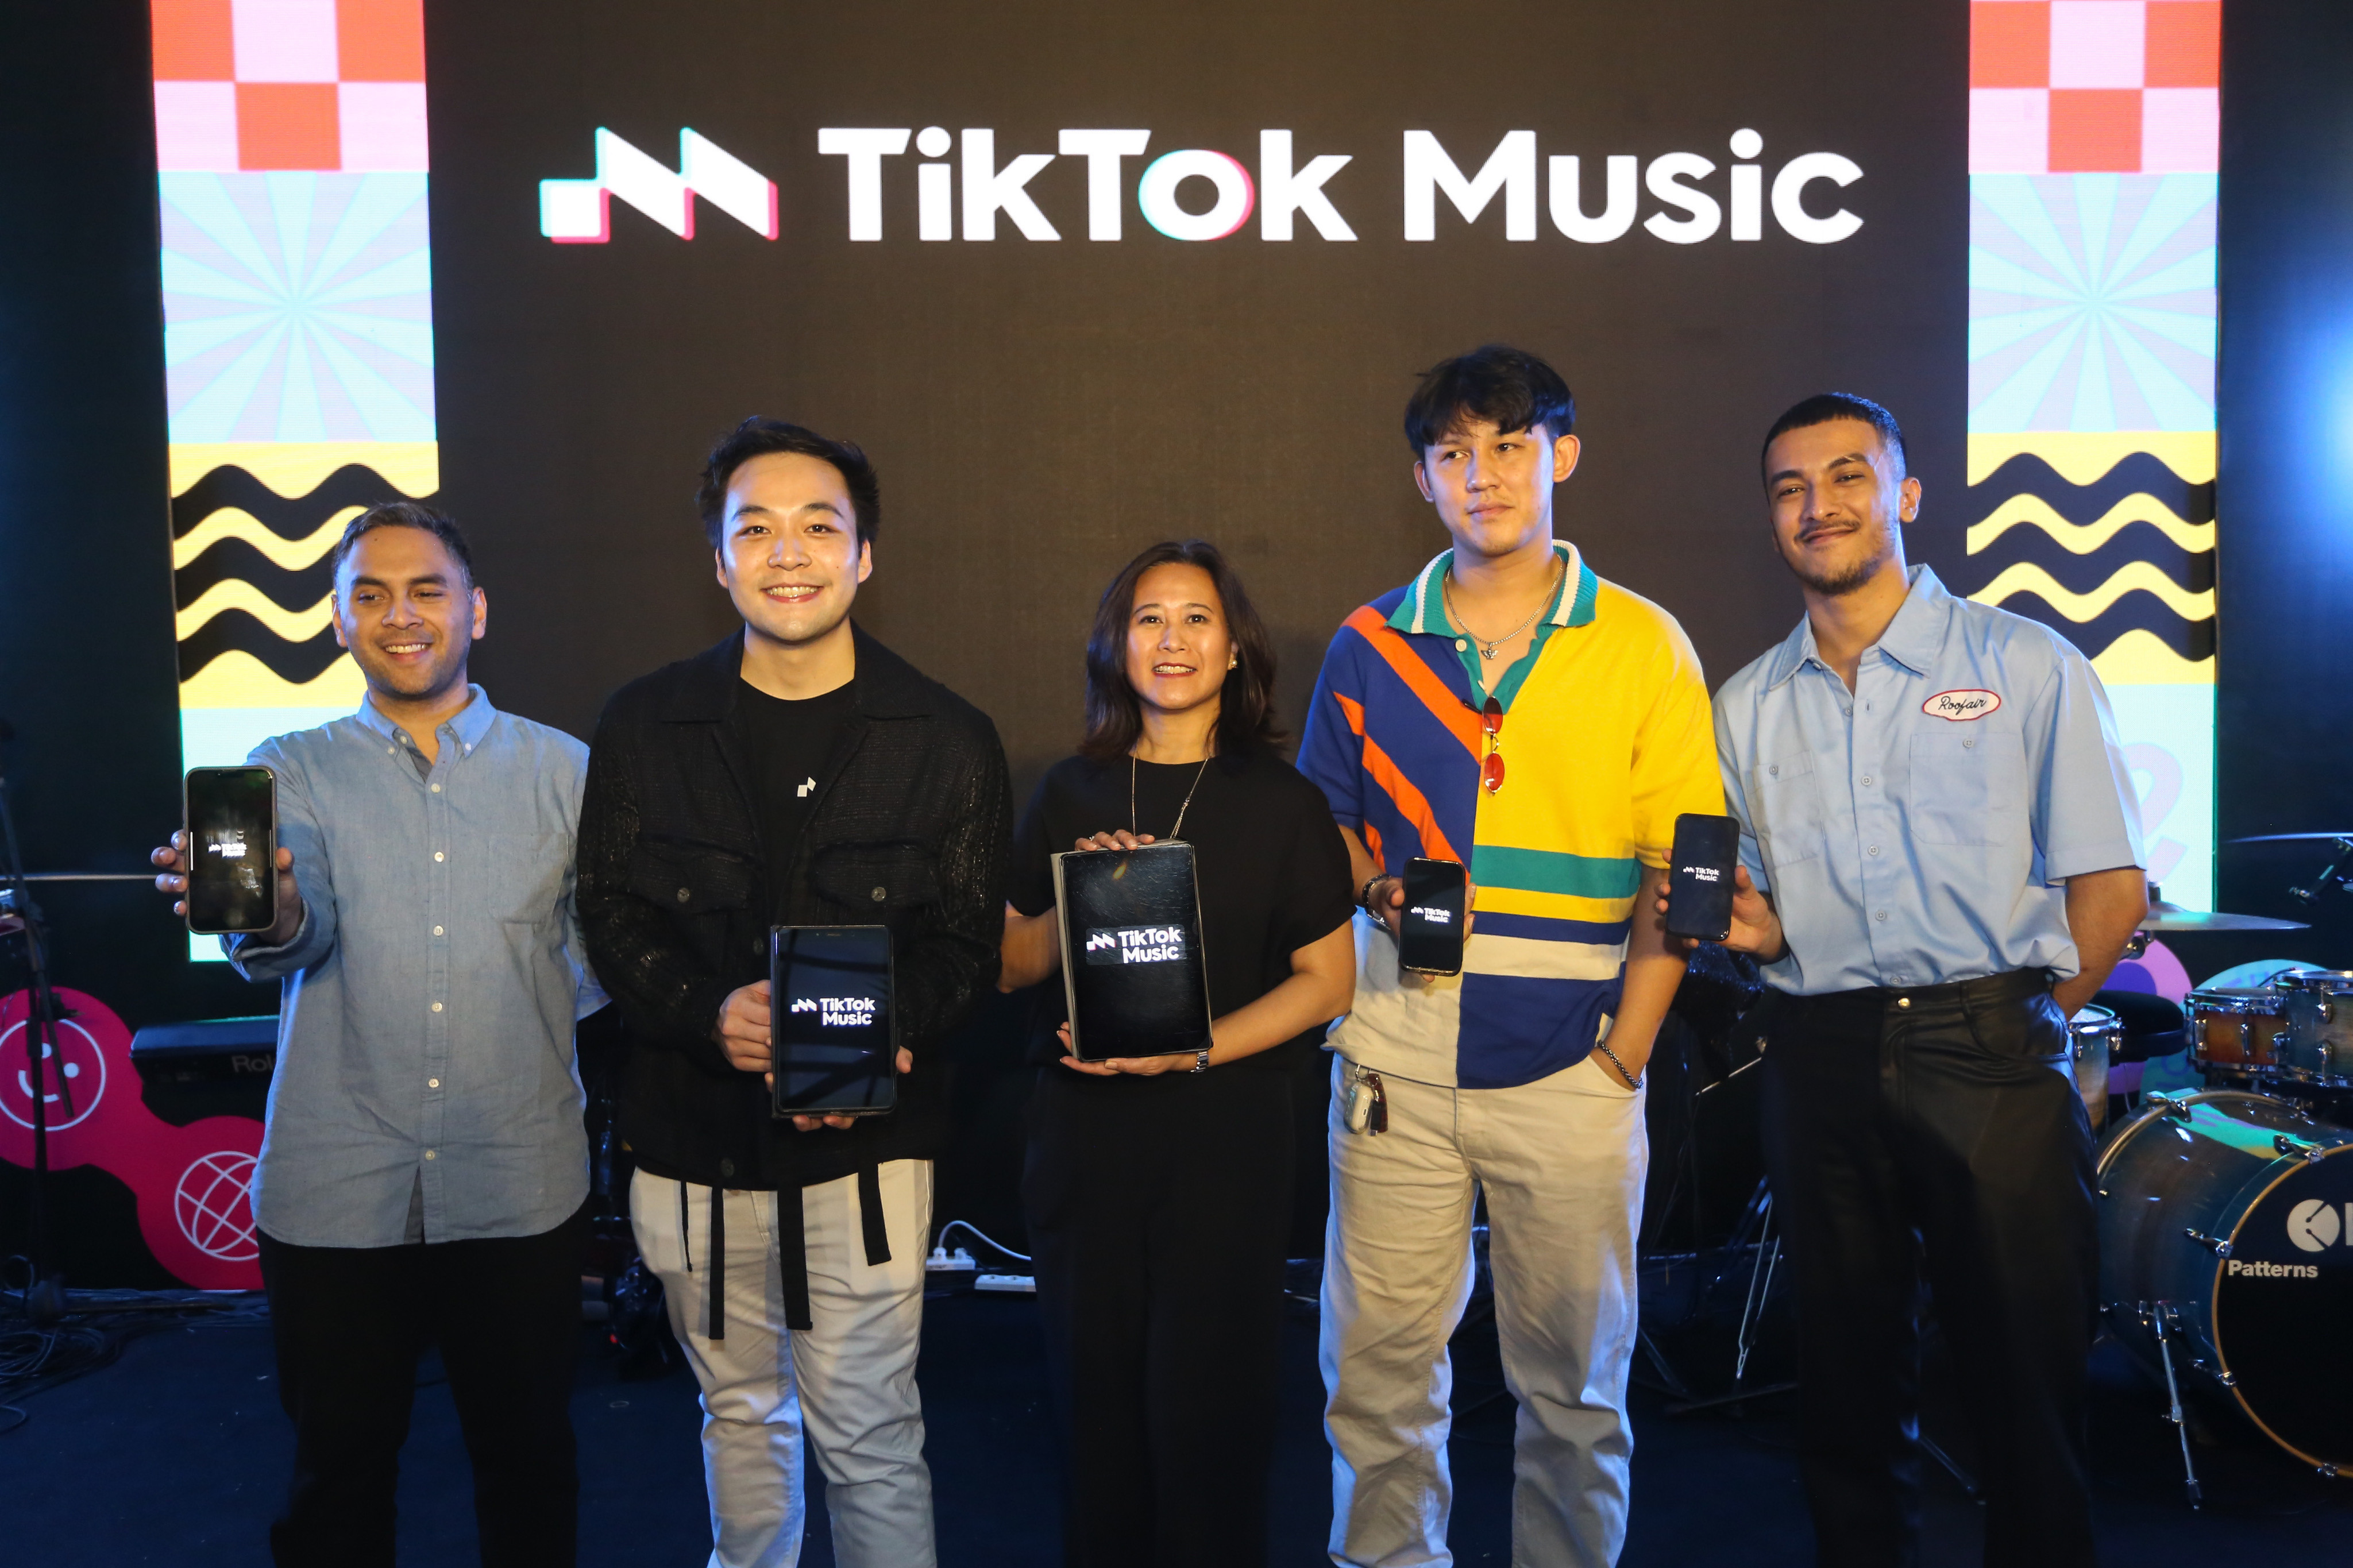 Ramaikan Platform Musik Digital, Tiktok Music Kini Hadir Di Indonesia